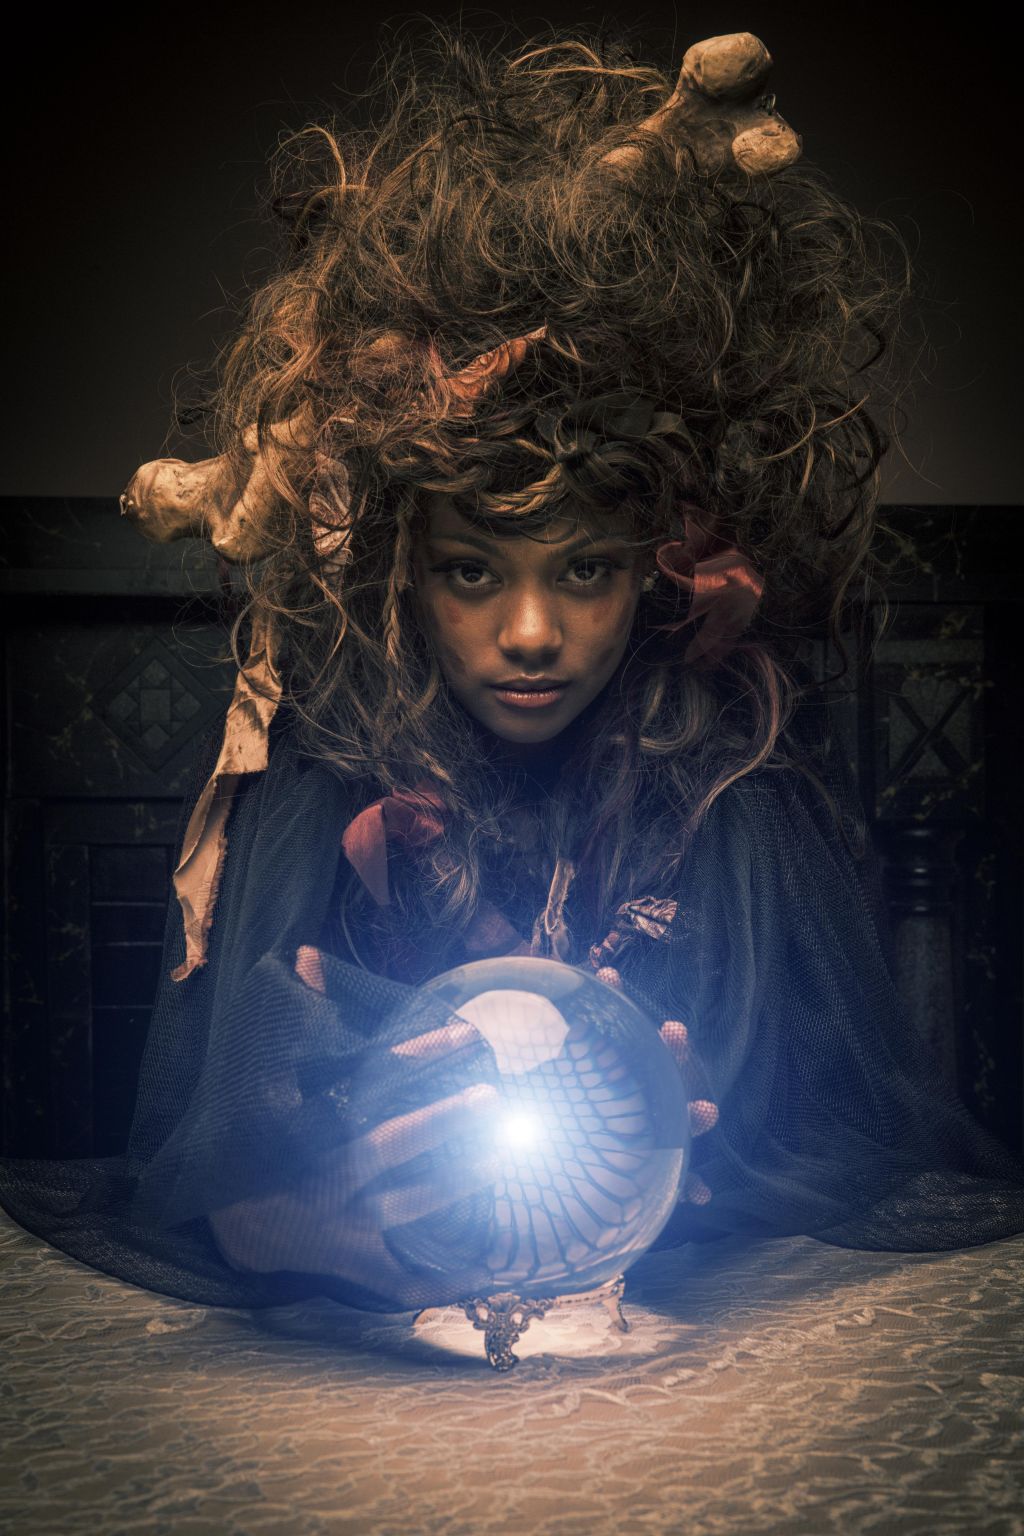 Voodoo Priestess with magic ball